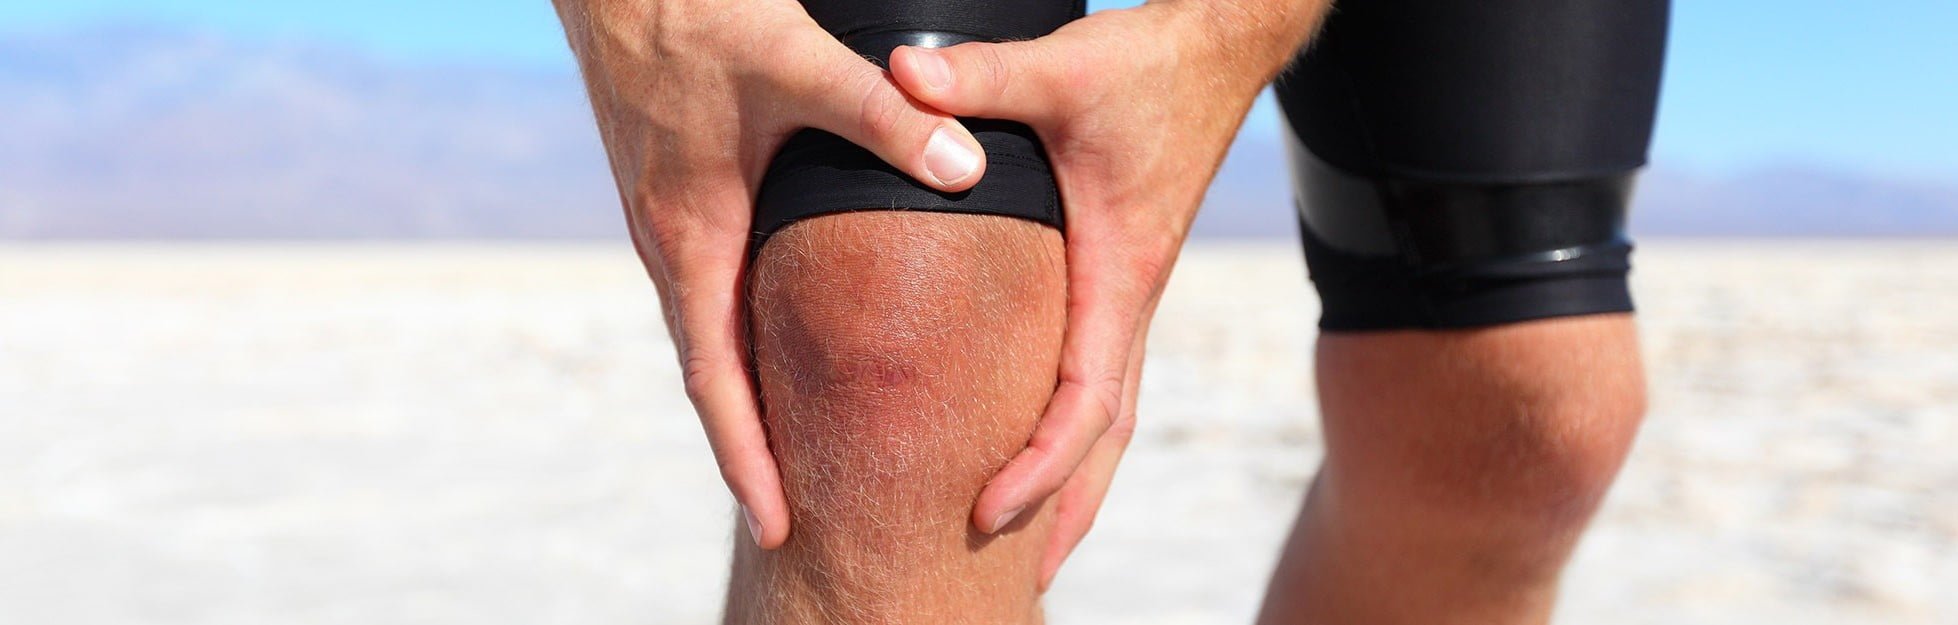 Leziunile ligamentelor colaterale ale genunchiului – Dr. Alin Popescu